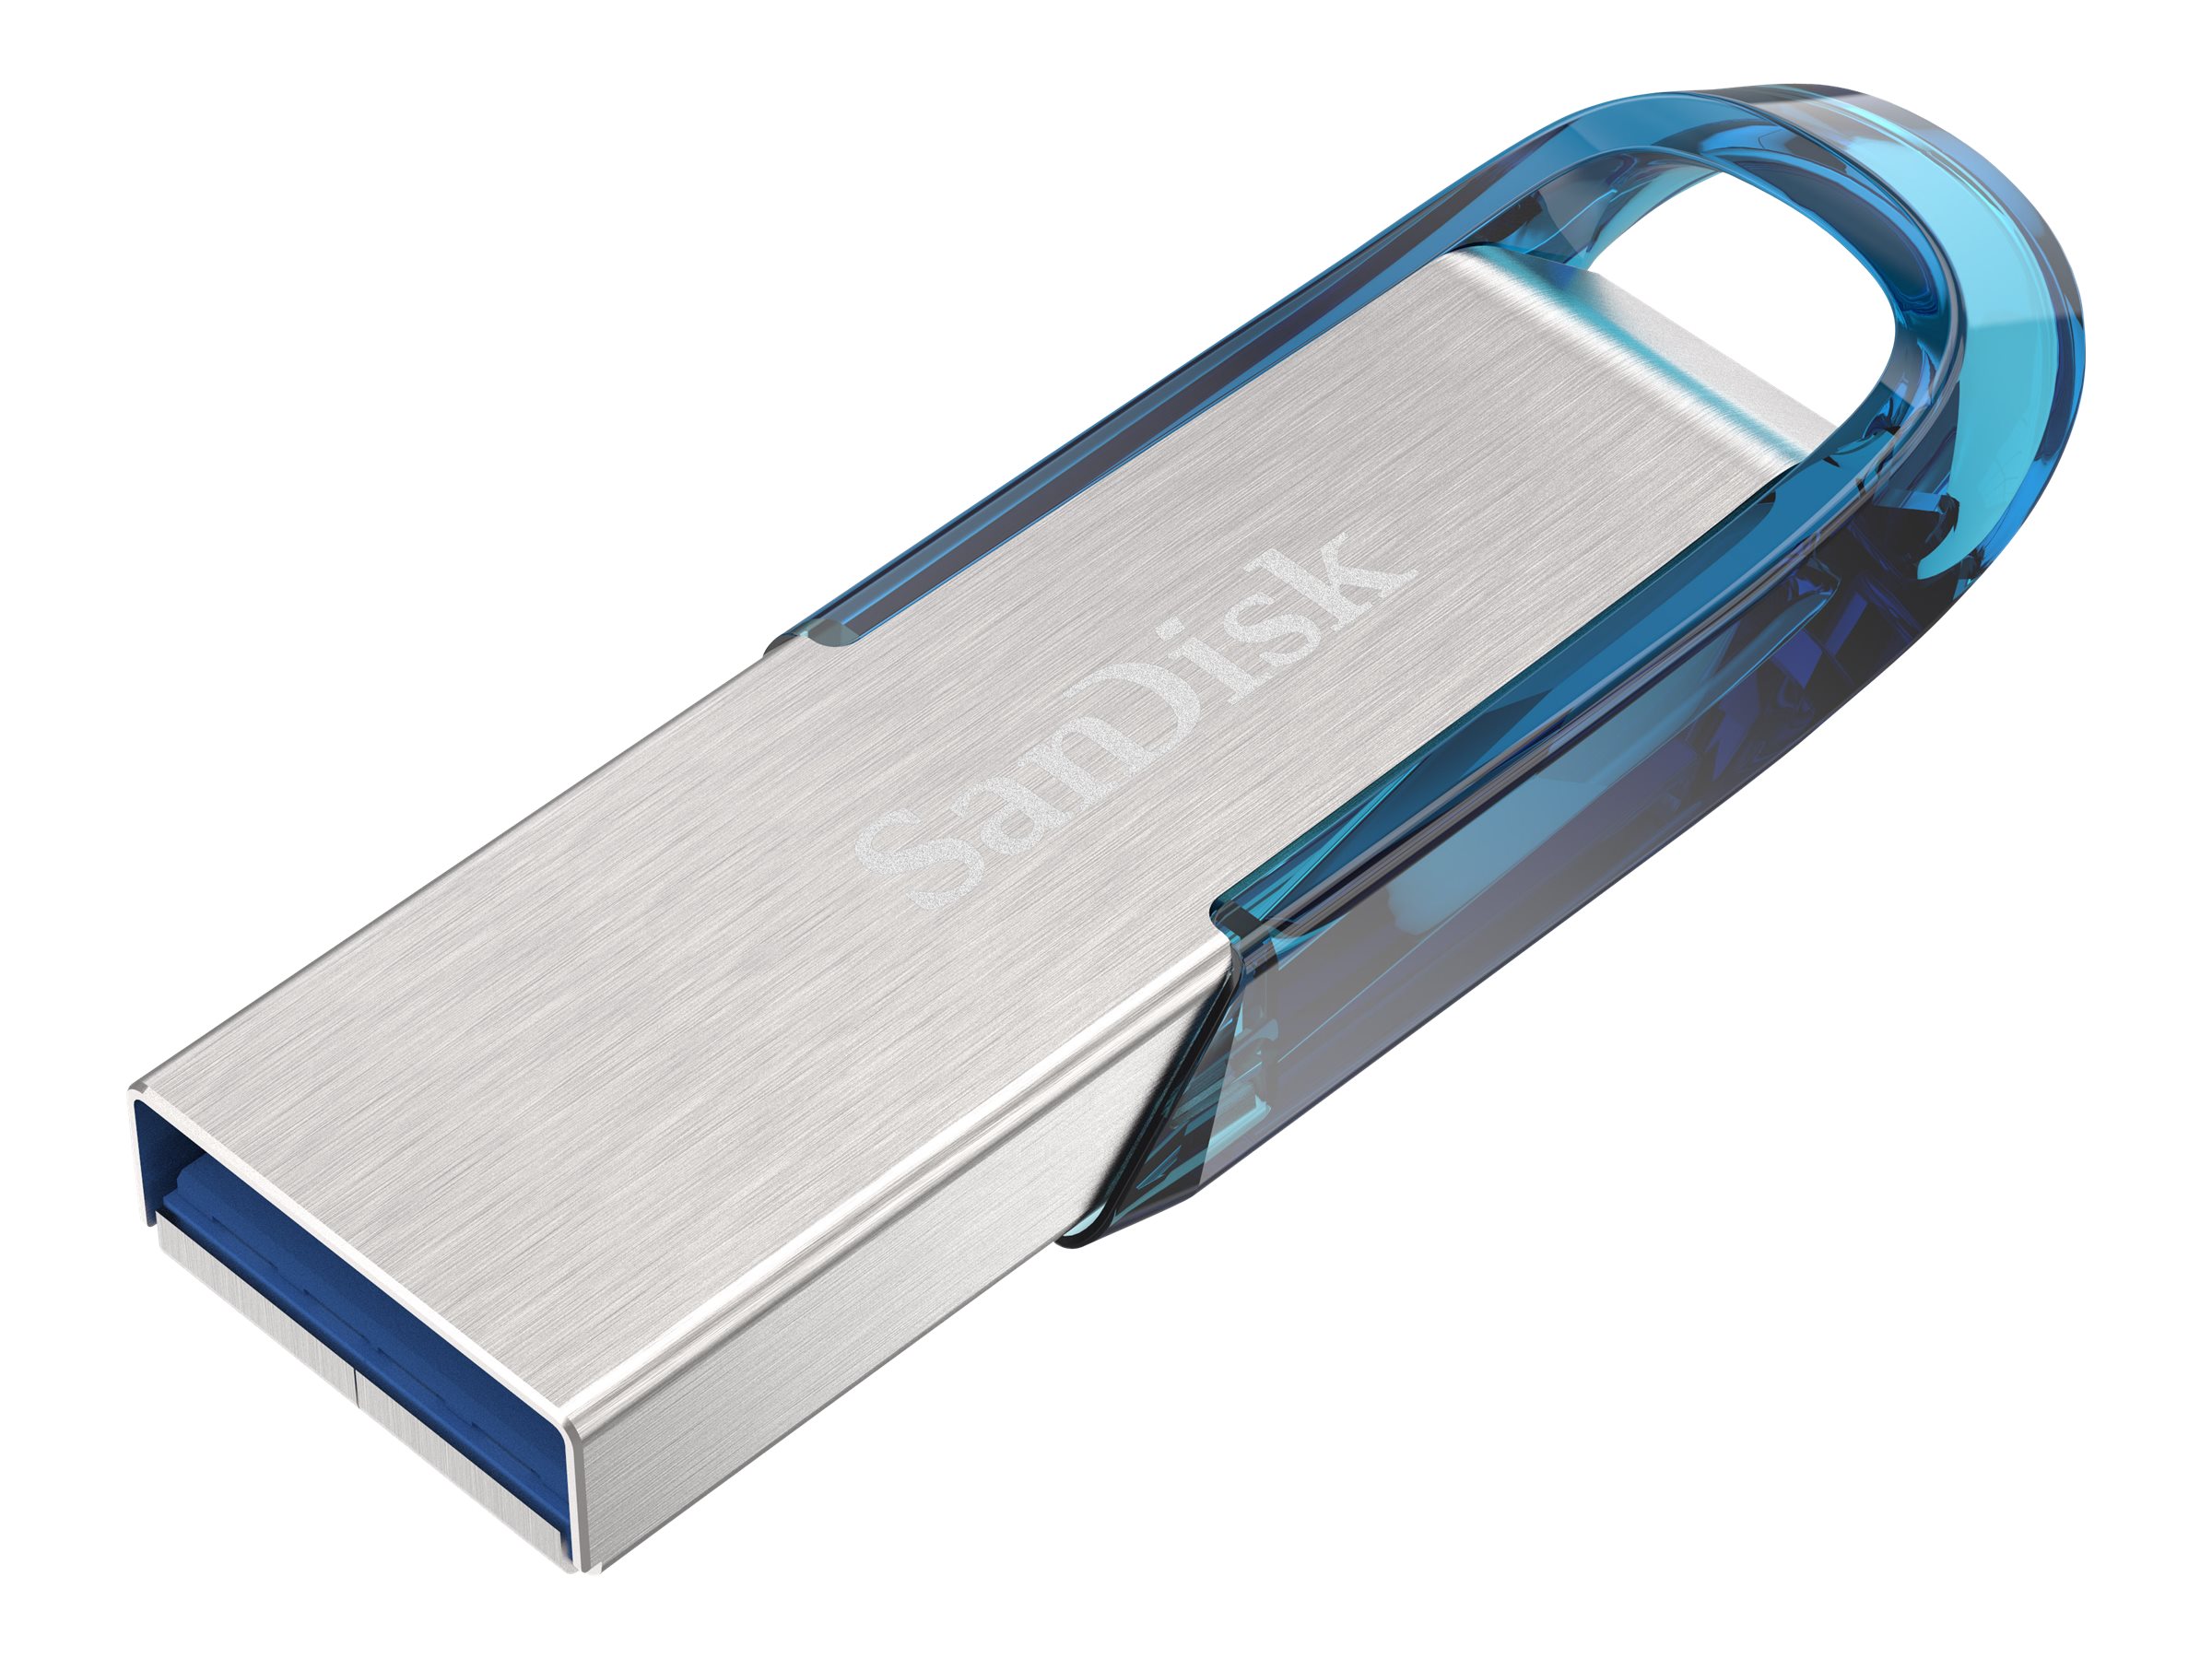 SanDisk Ultra Flair - Clé USB - 128 Go - USB 3.0 - bleu - SDCZ73-128G-G46B - Lecteurs flash